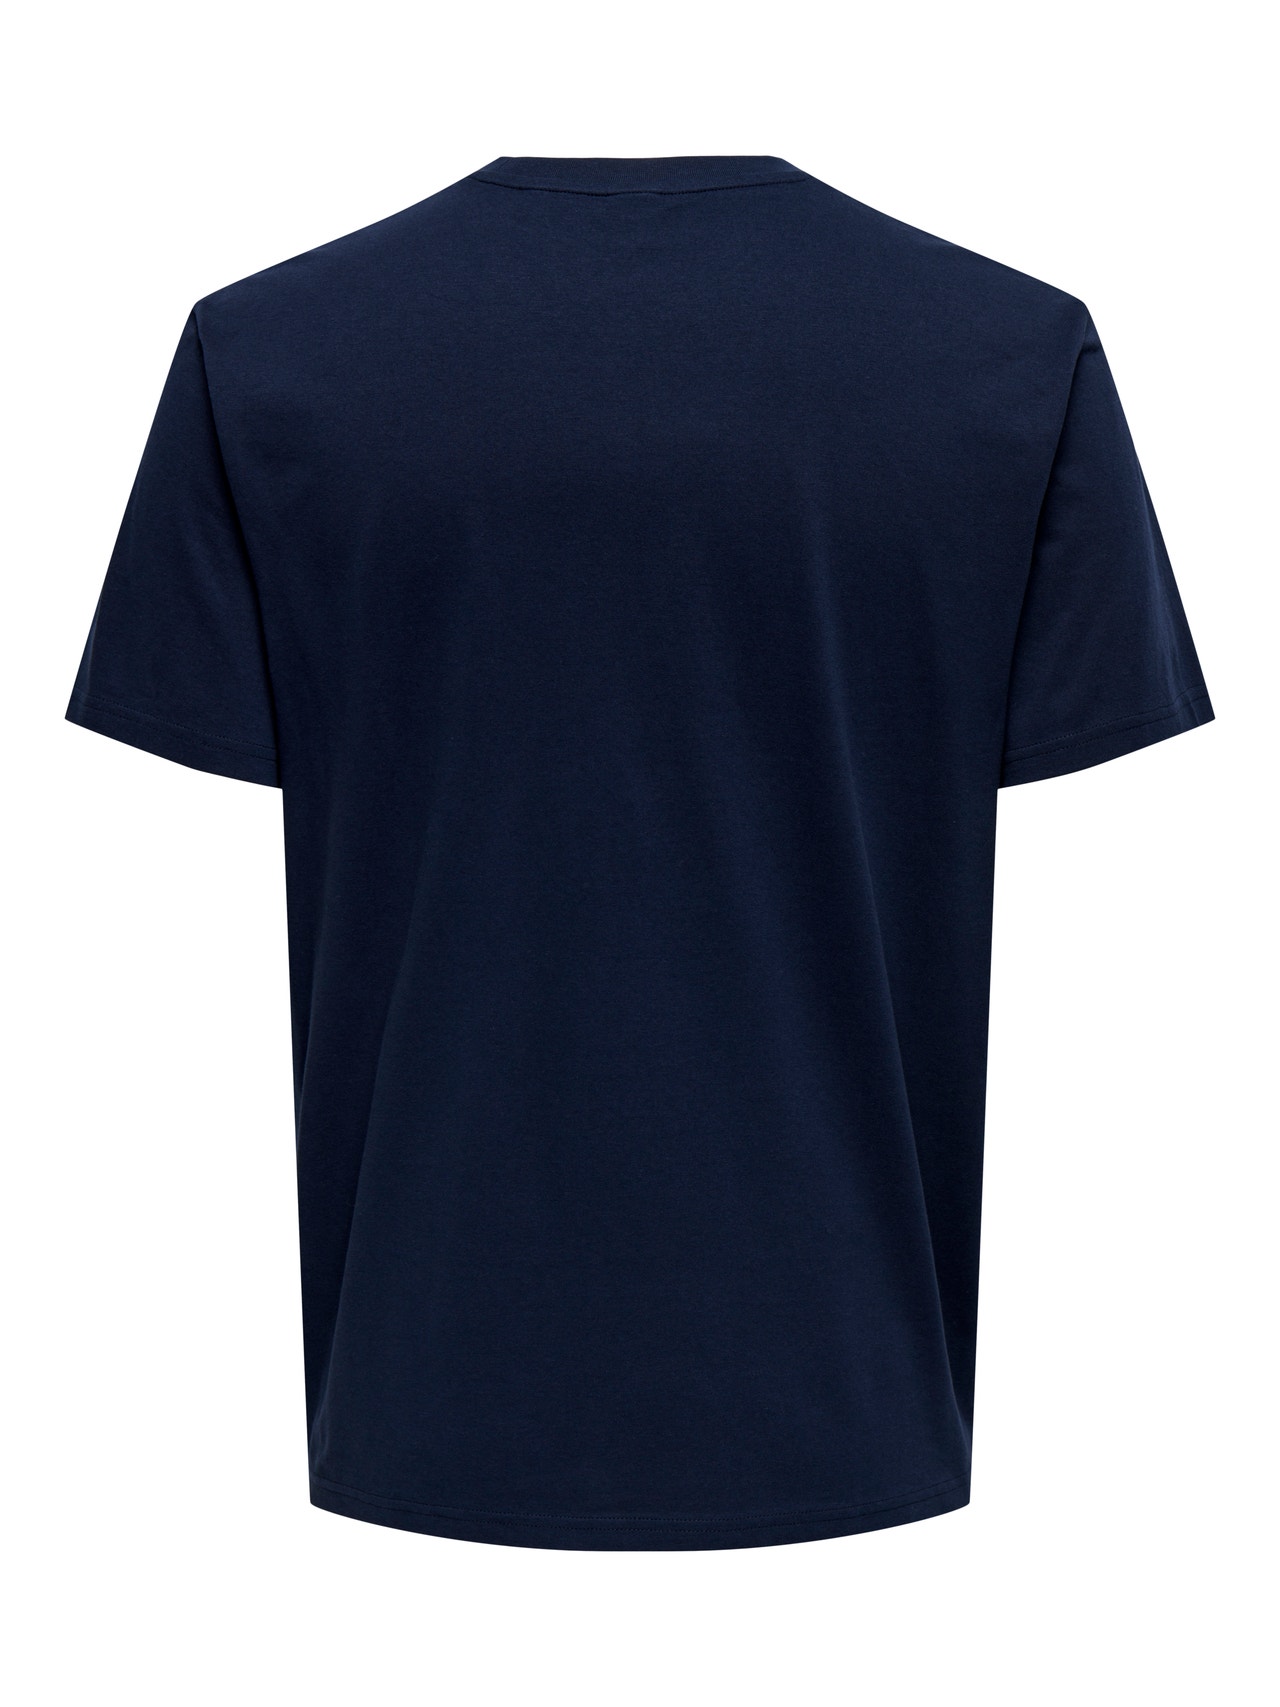 ONLY & SONS Regular Fit Round Neck T-Shirt -Navy Blazer - 22028593